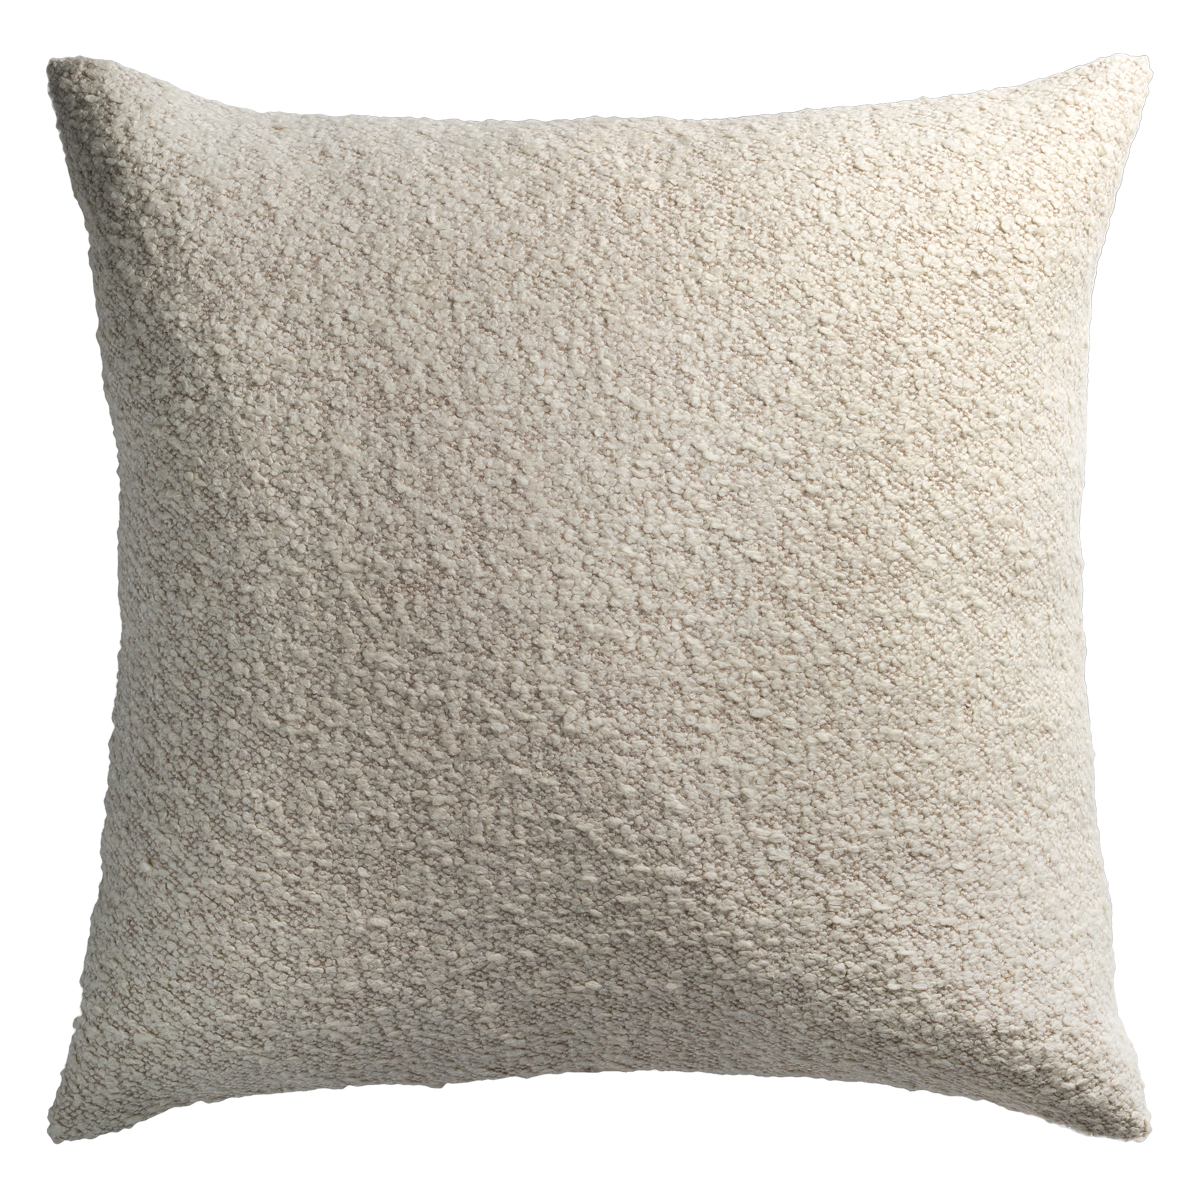 Attenborough cushion with zip detail